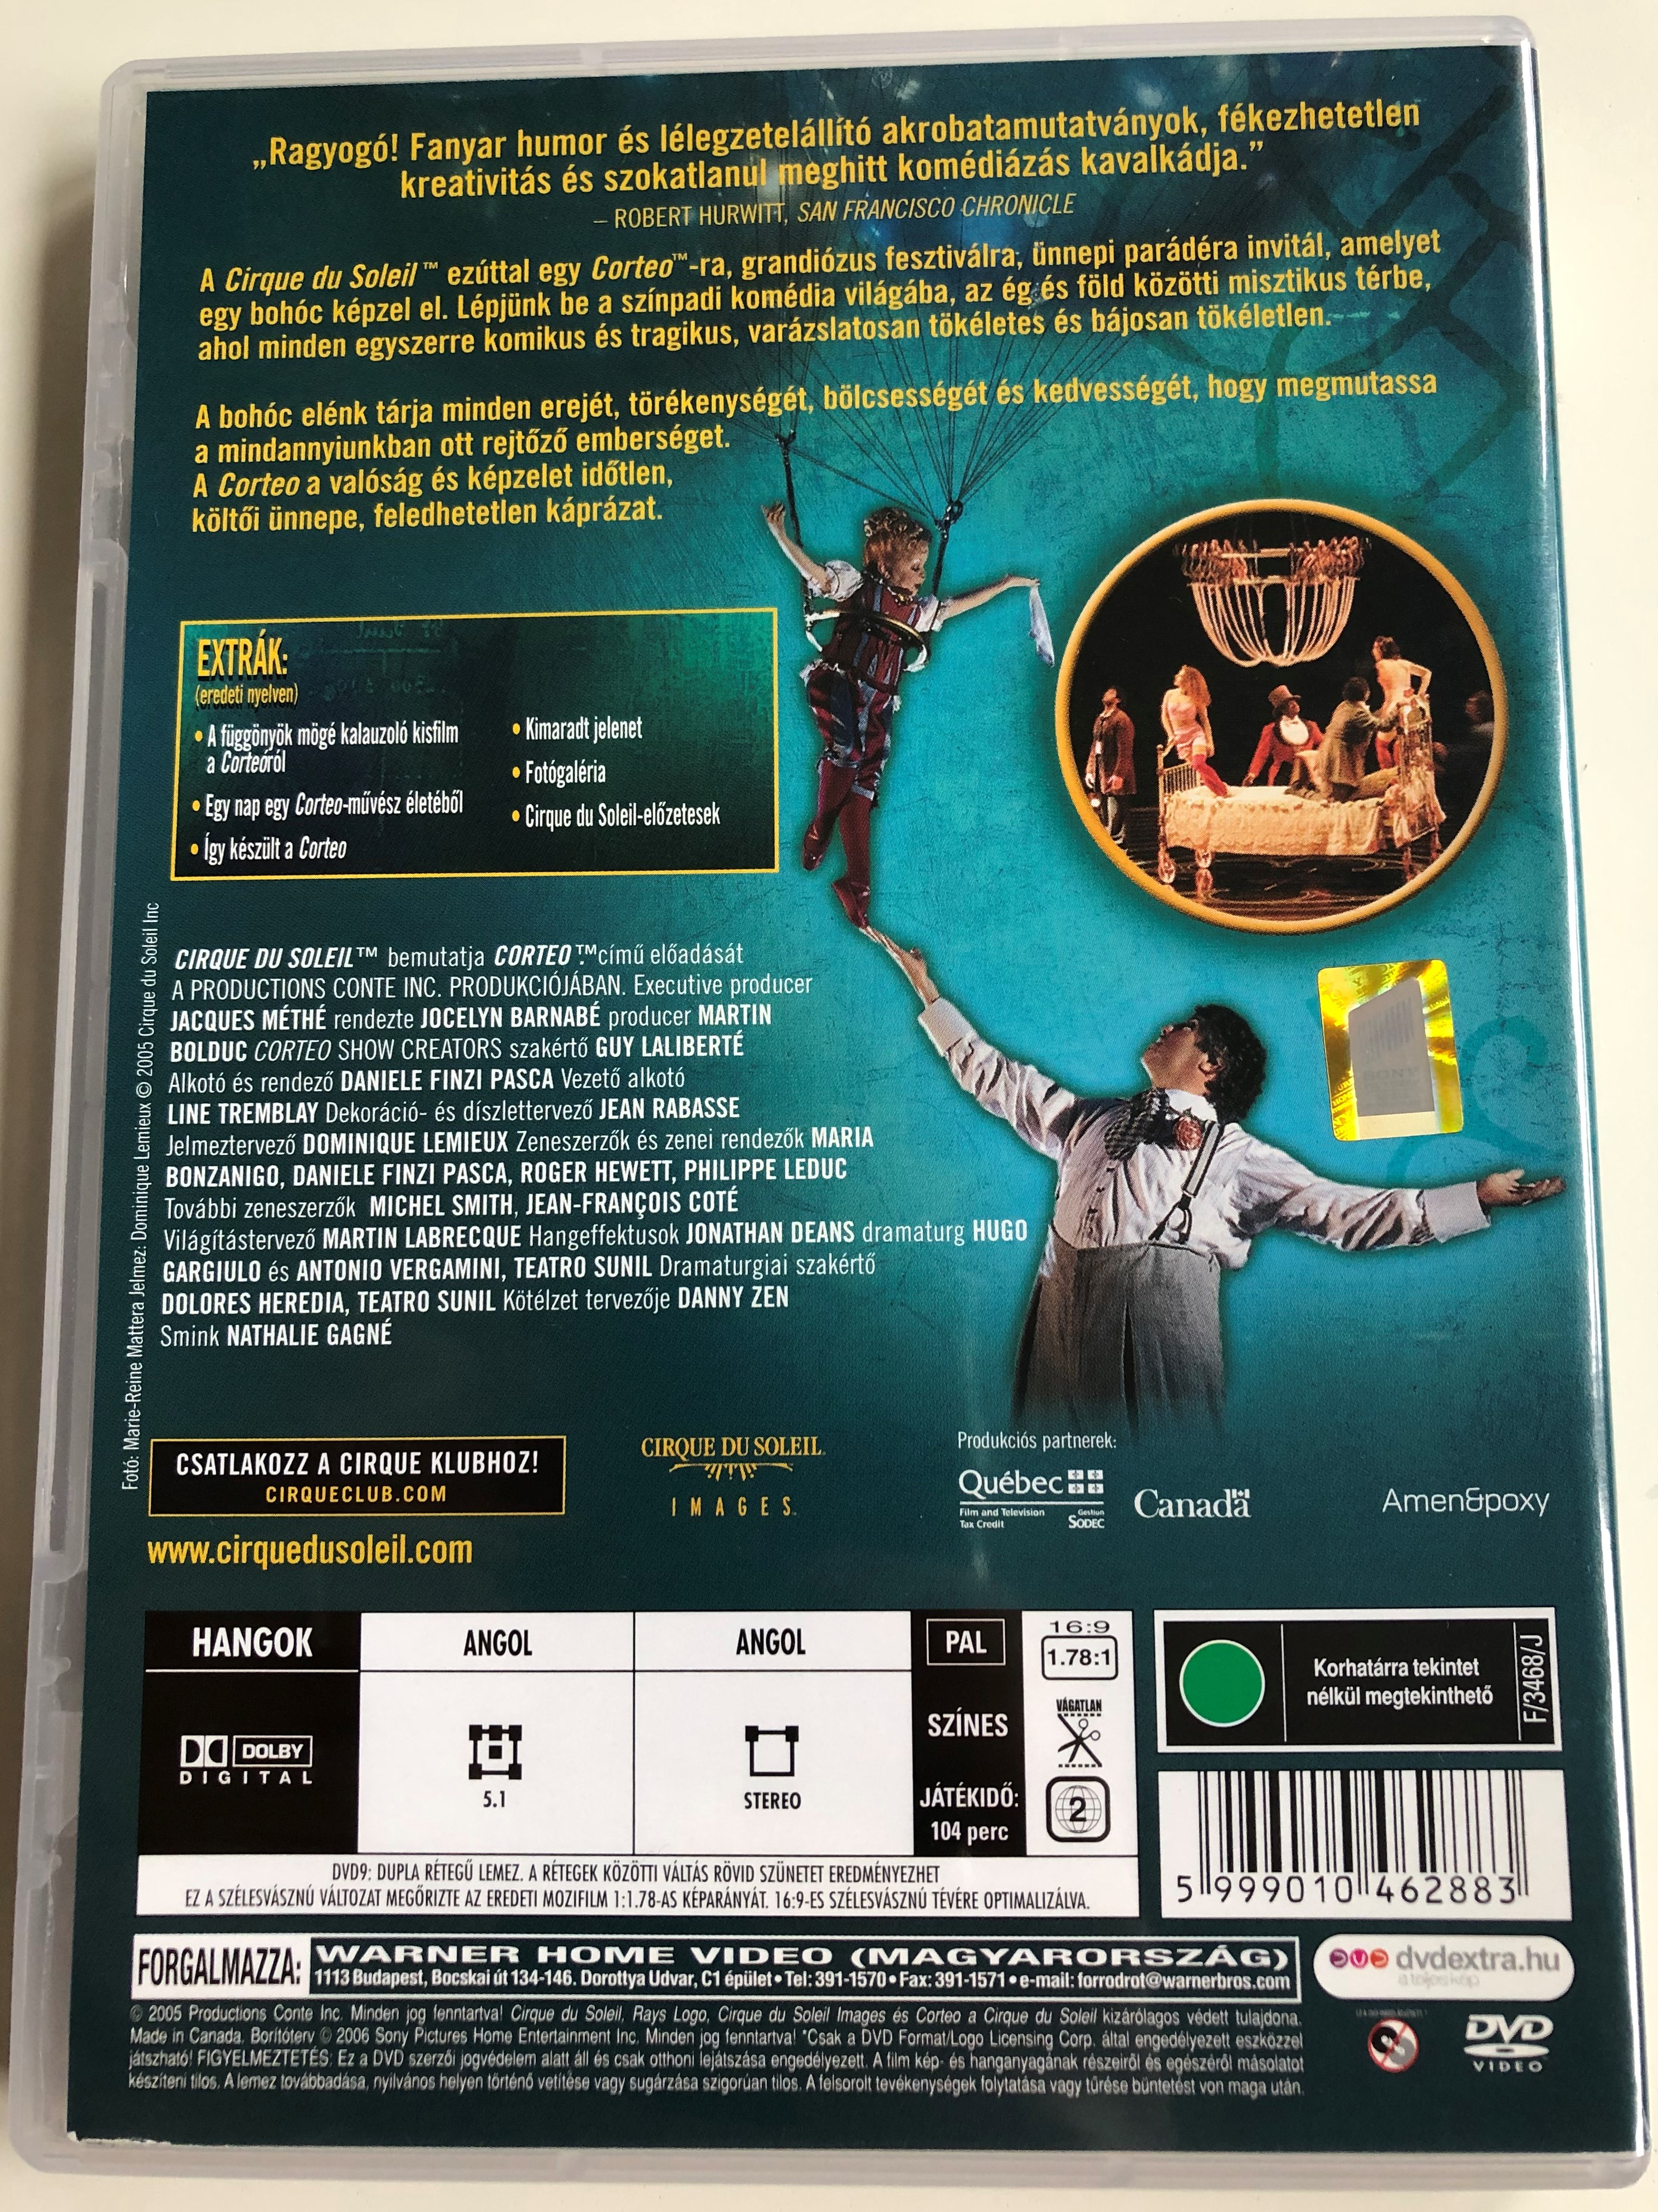 Cirque du Soleil - Corteo DVD 2005 Ünnepi menet / Directed by Jocelyn  Barnabé, Daniele Finzi Pasca / Actors: Mauro Mozzani, Igor Issakov, Jacques  Méthé / Contemporary circus show - bibleinmylanguage